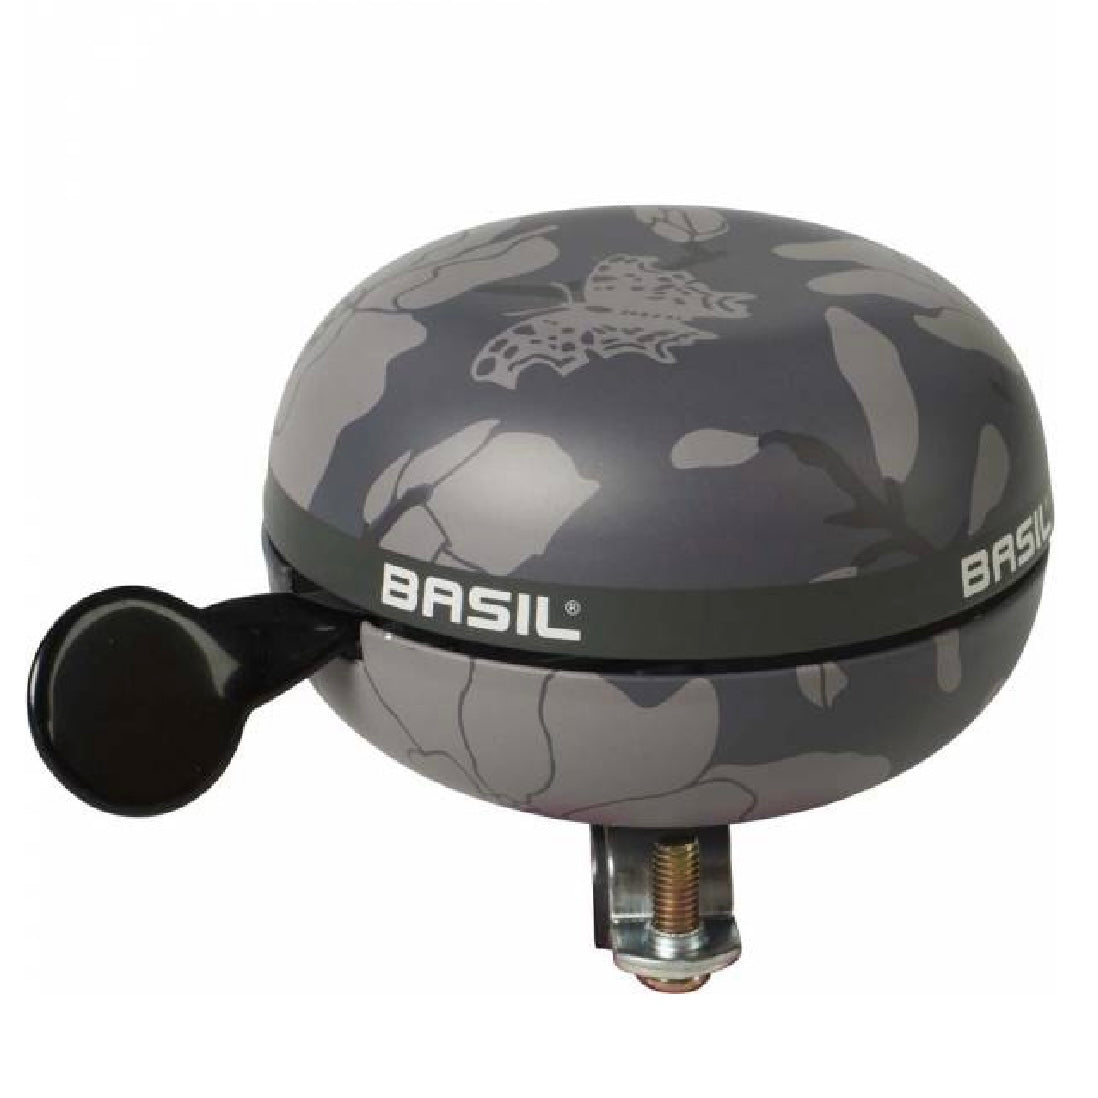 Basil Magnolia Big Bell - 80mm